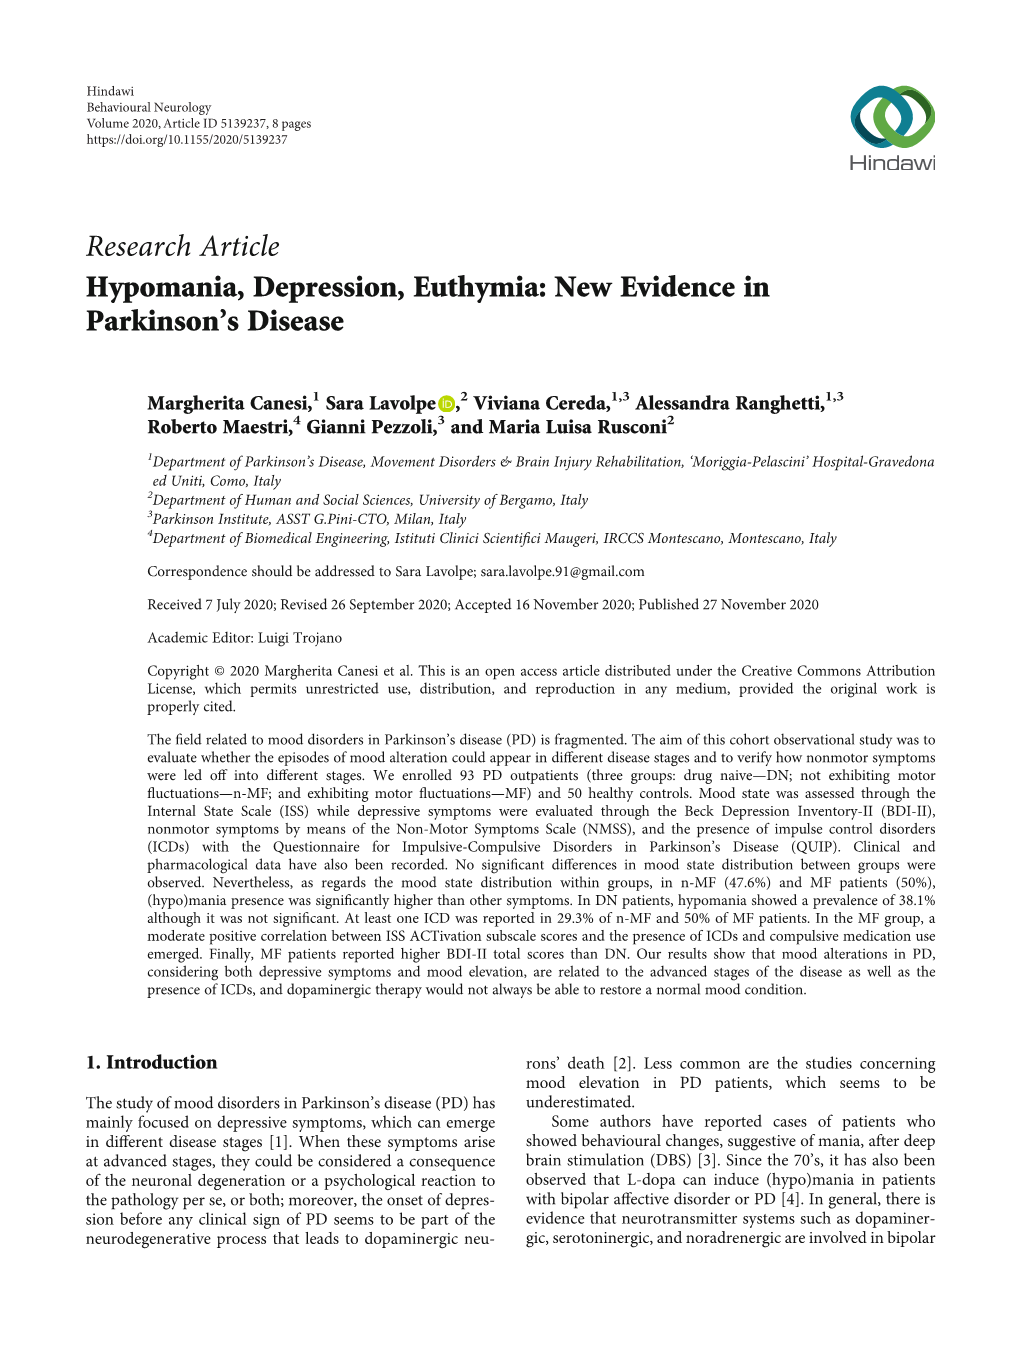 Hypomania, Depression, Euthymia: New Evidence in Parkinson's Disease